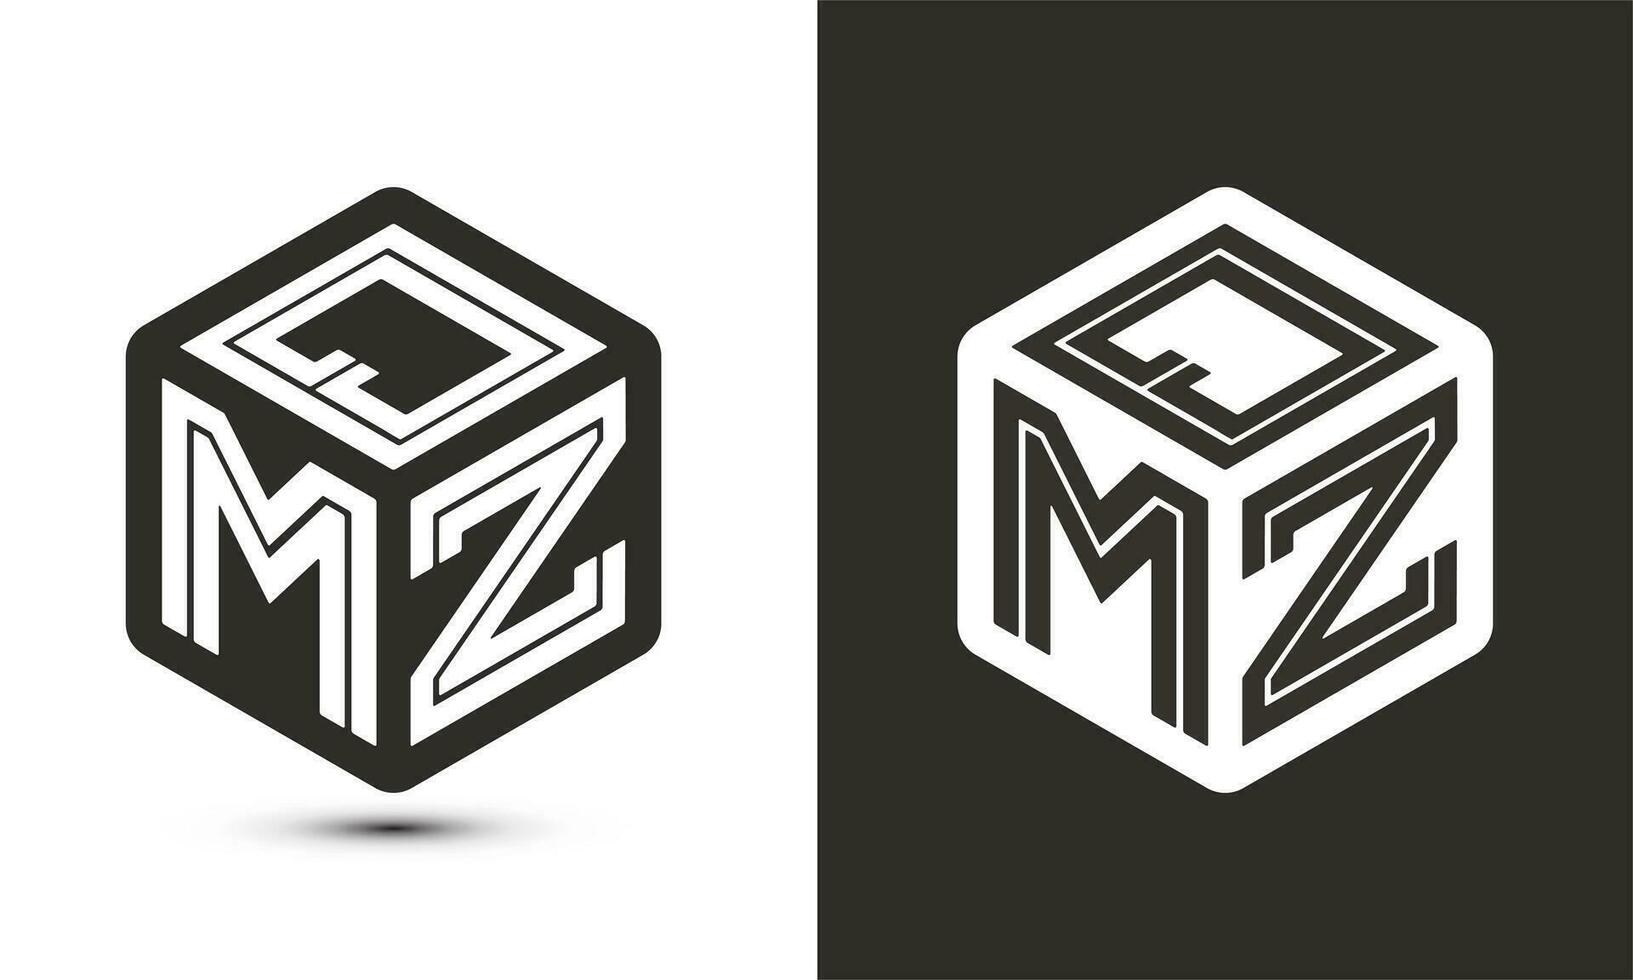 qmz letra logo diseño con ilustrador cubo logo, vector logo moderno alfabeto fuente superposición estilo.